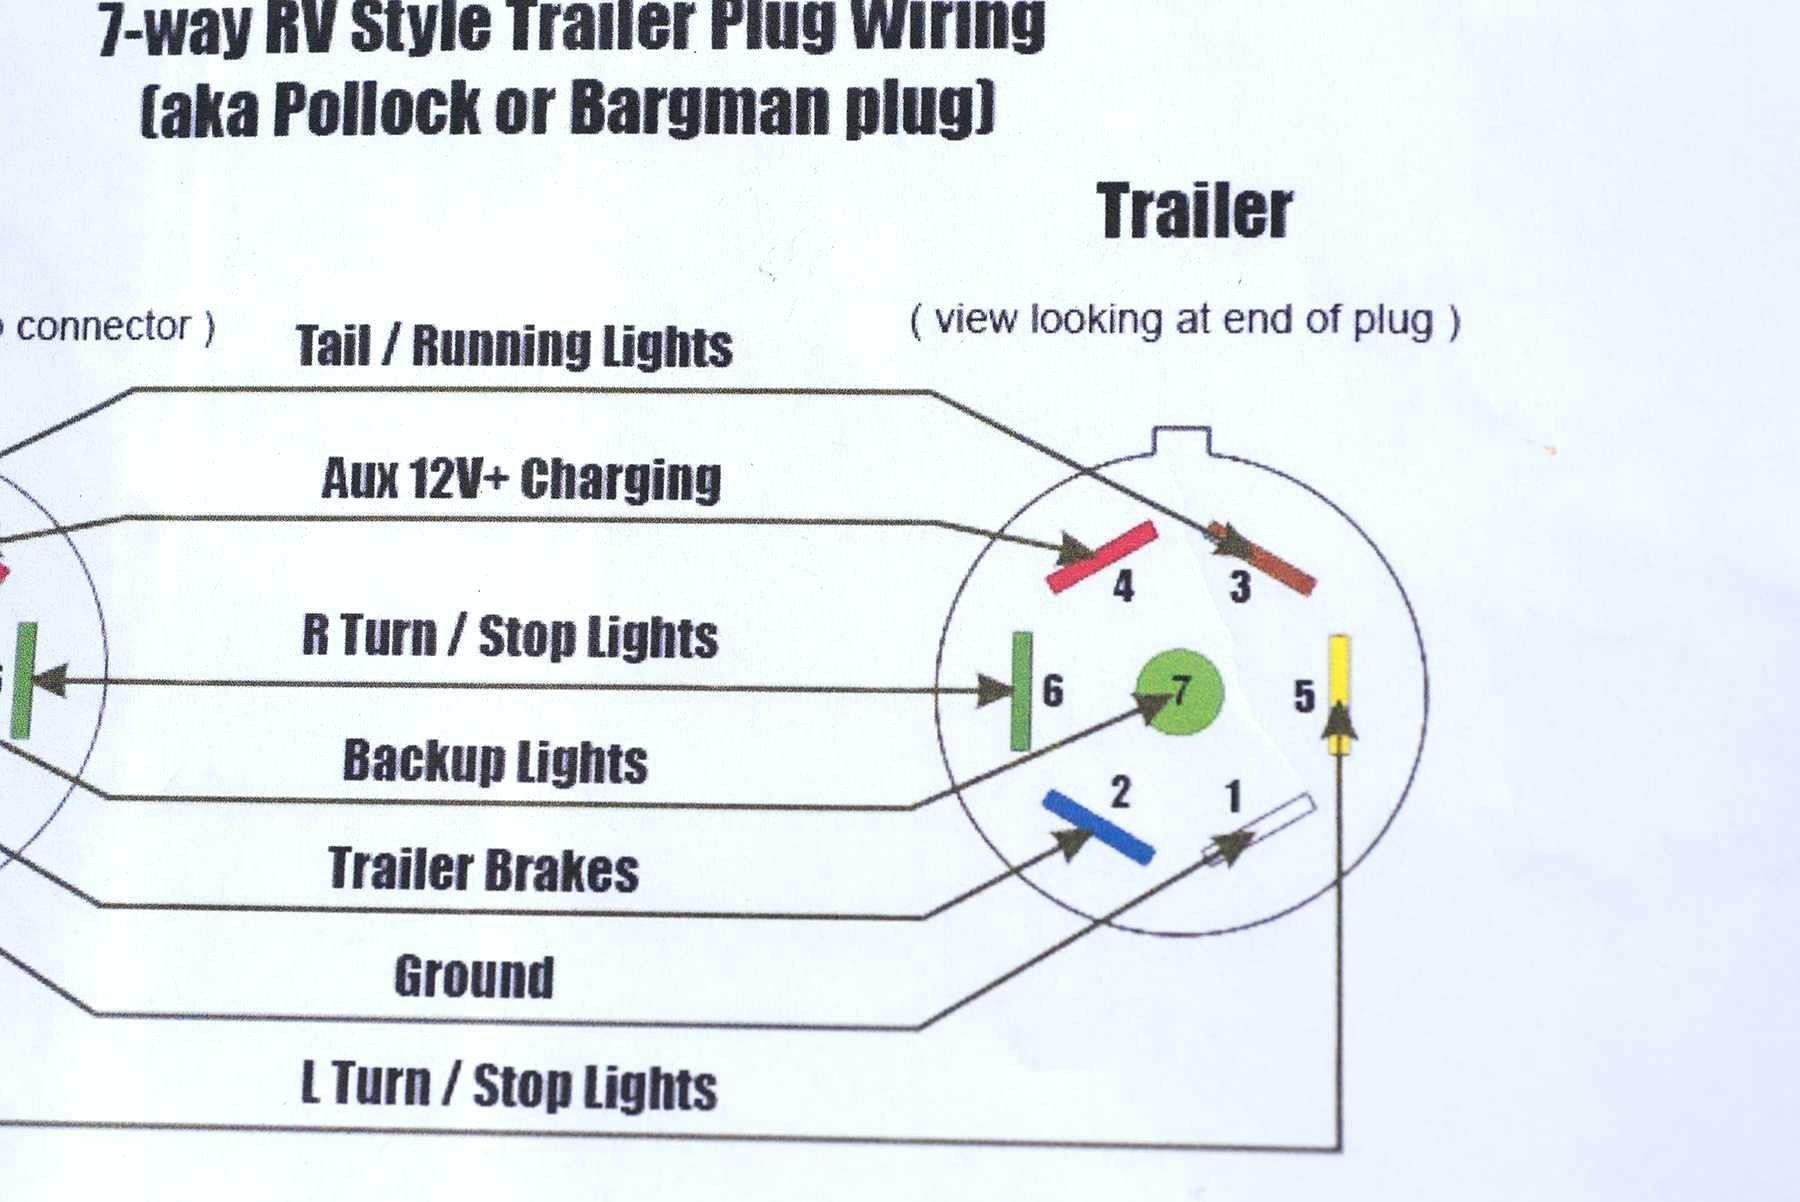 Pj Trailer Wiring Diagram Pj Trailer Wire Diagram Wiring Diagram Review